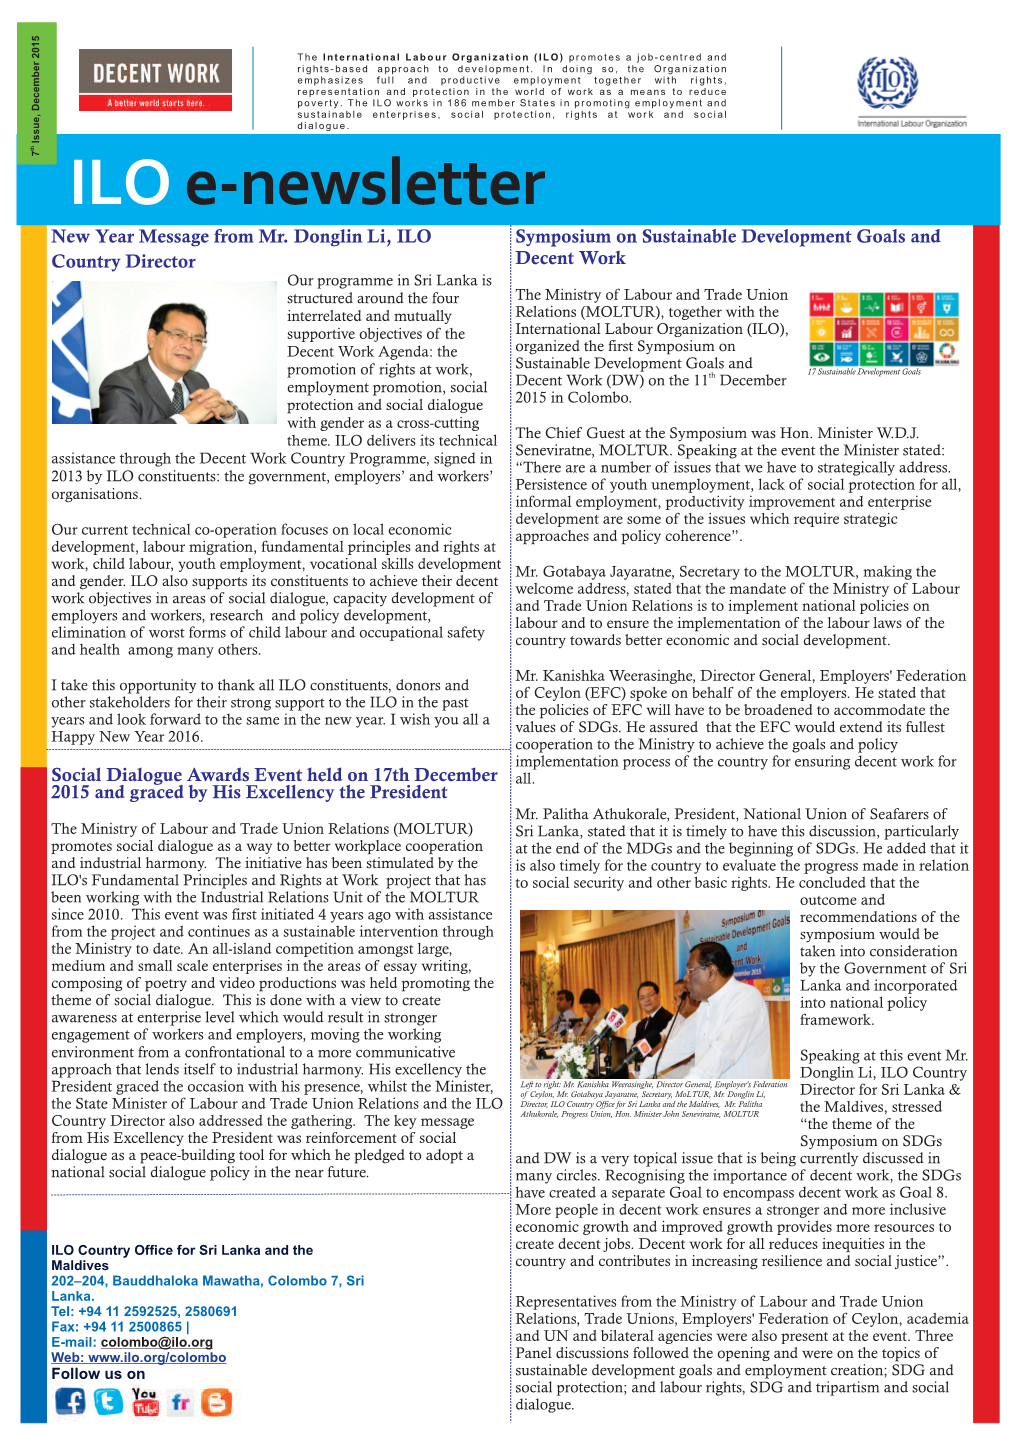 ILO Colombo E-Newsletter